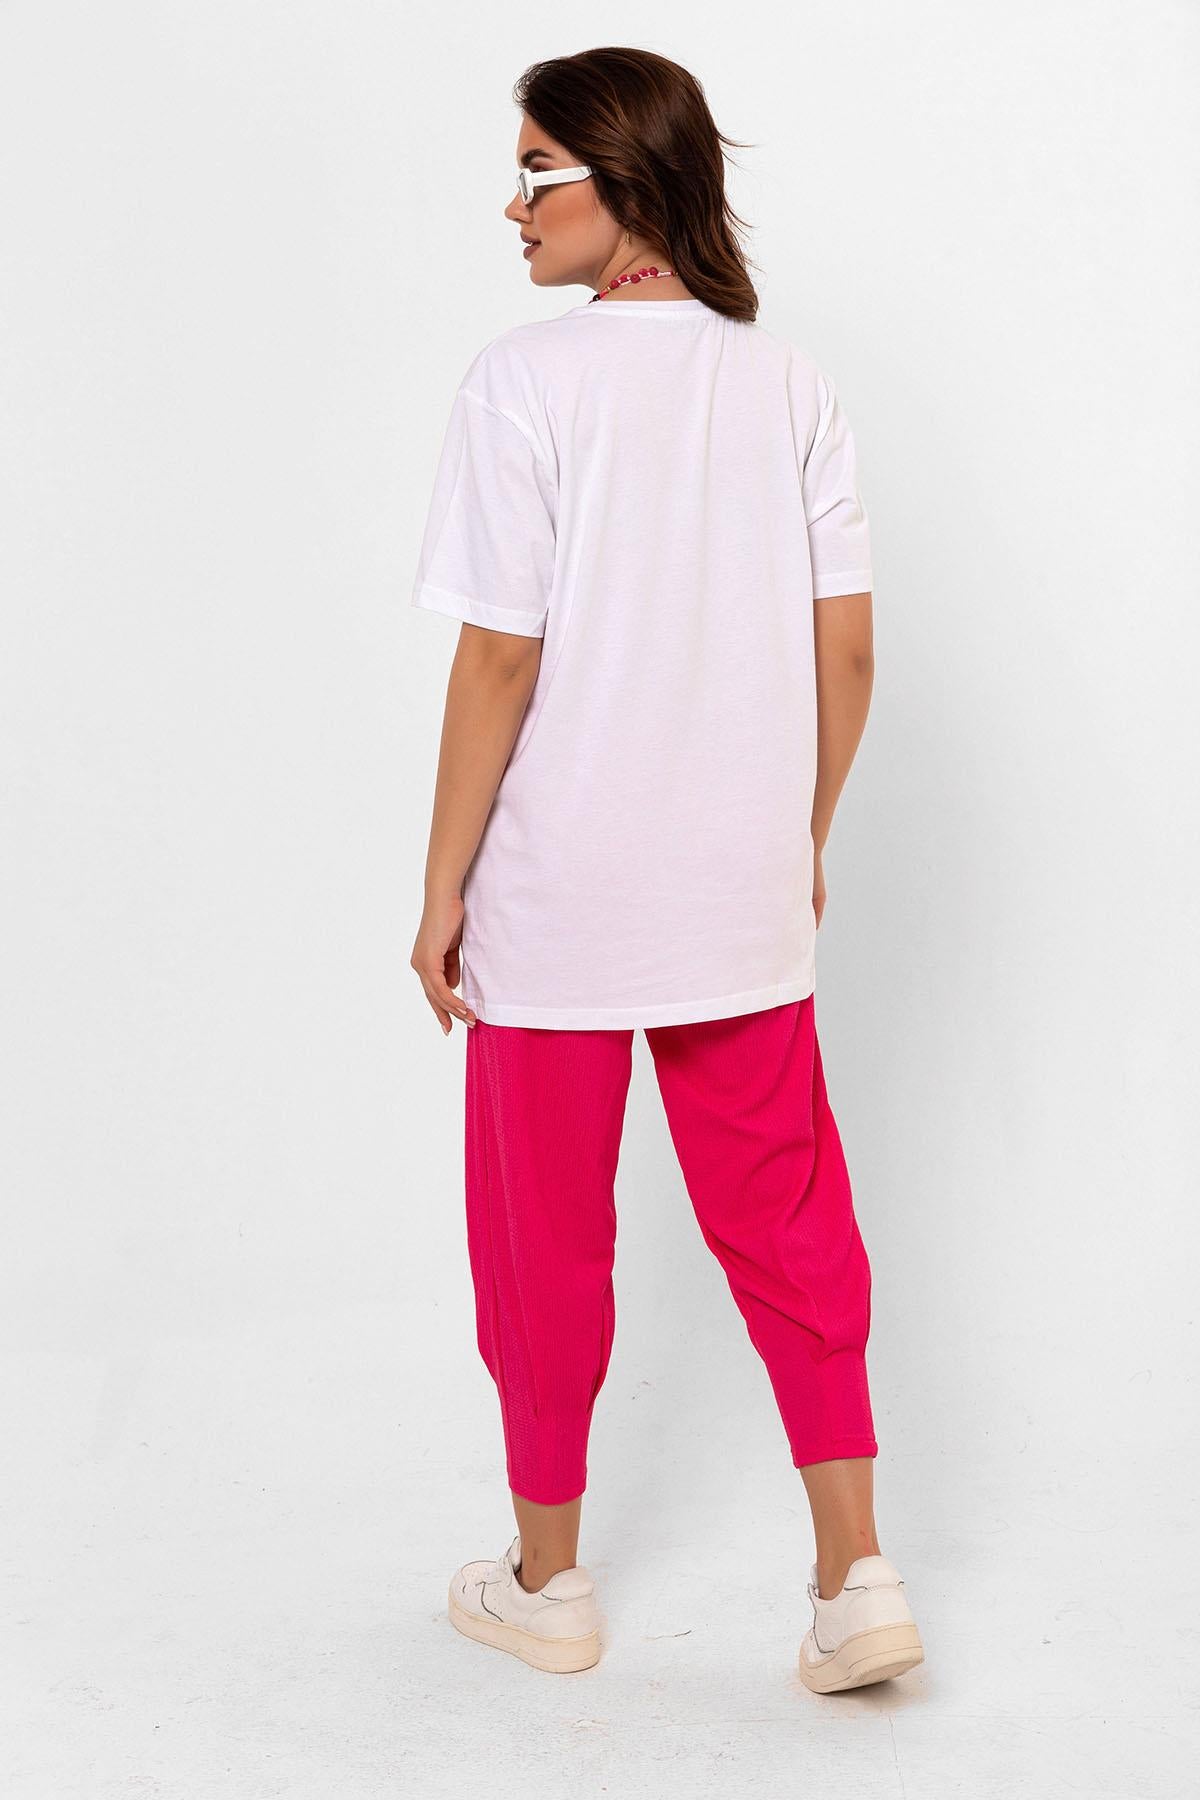 Crew Neck pink amazing art printed white overwoman female T -shirt